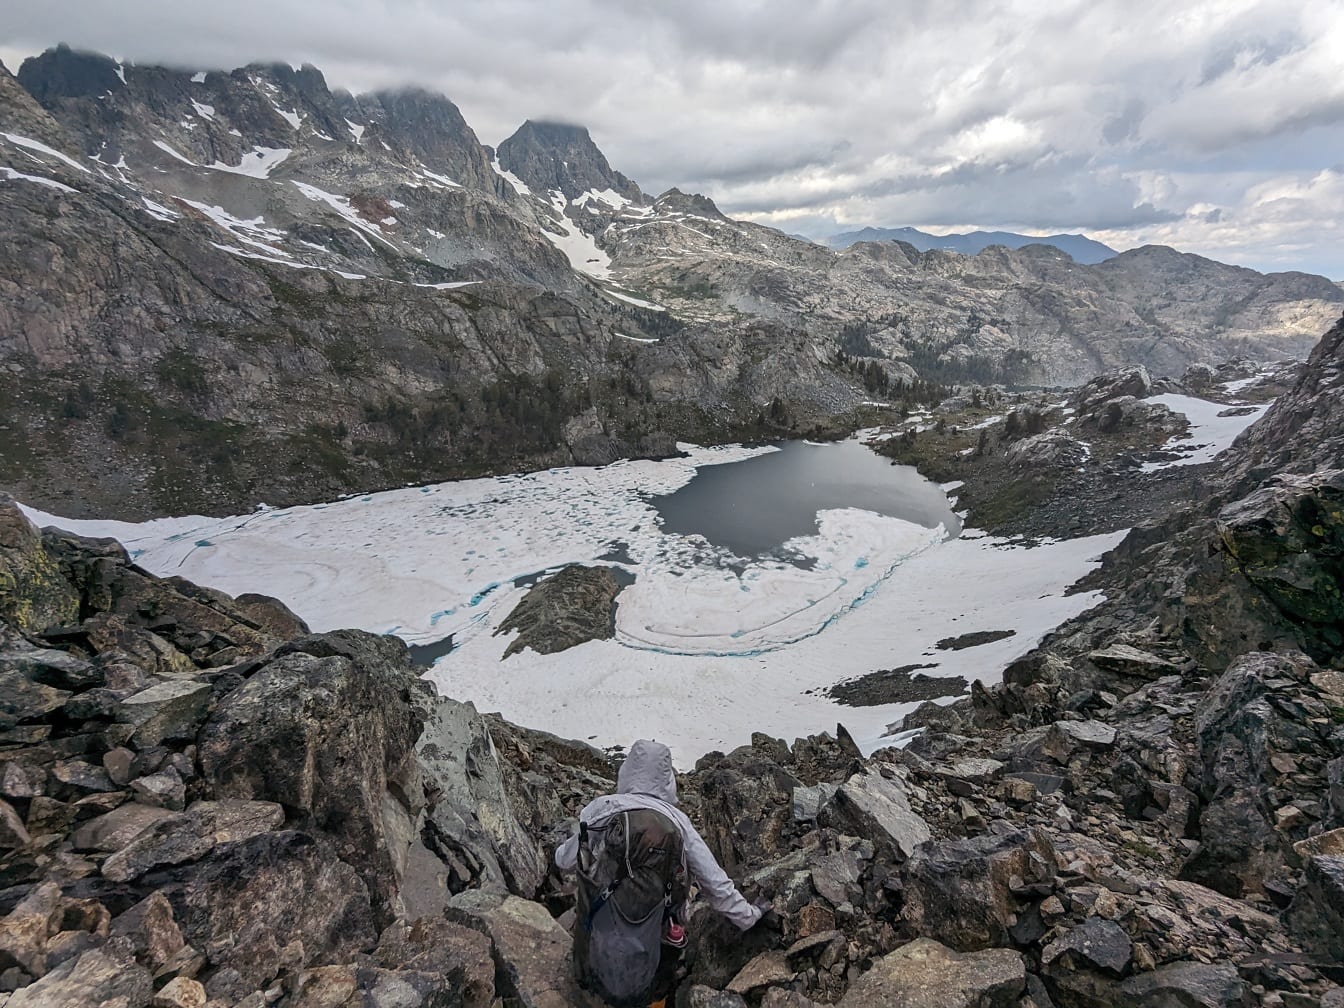 Extreme mountain climber on rocky mountains with frozen lake